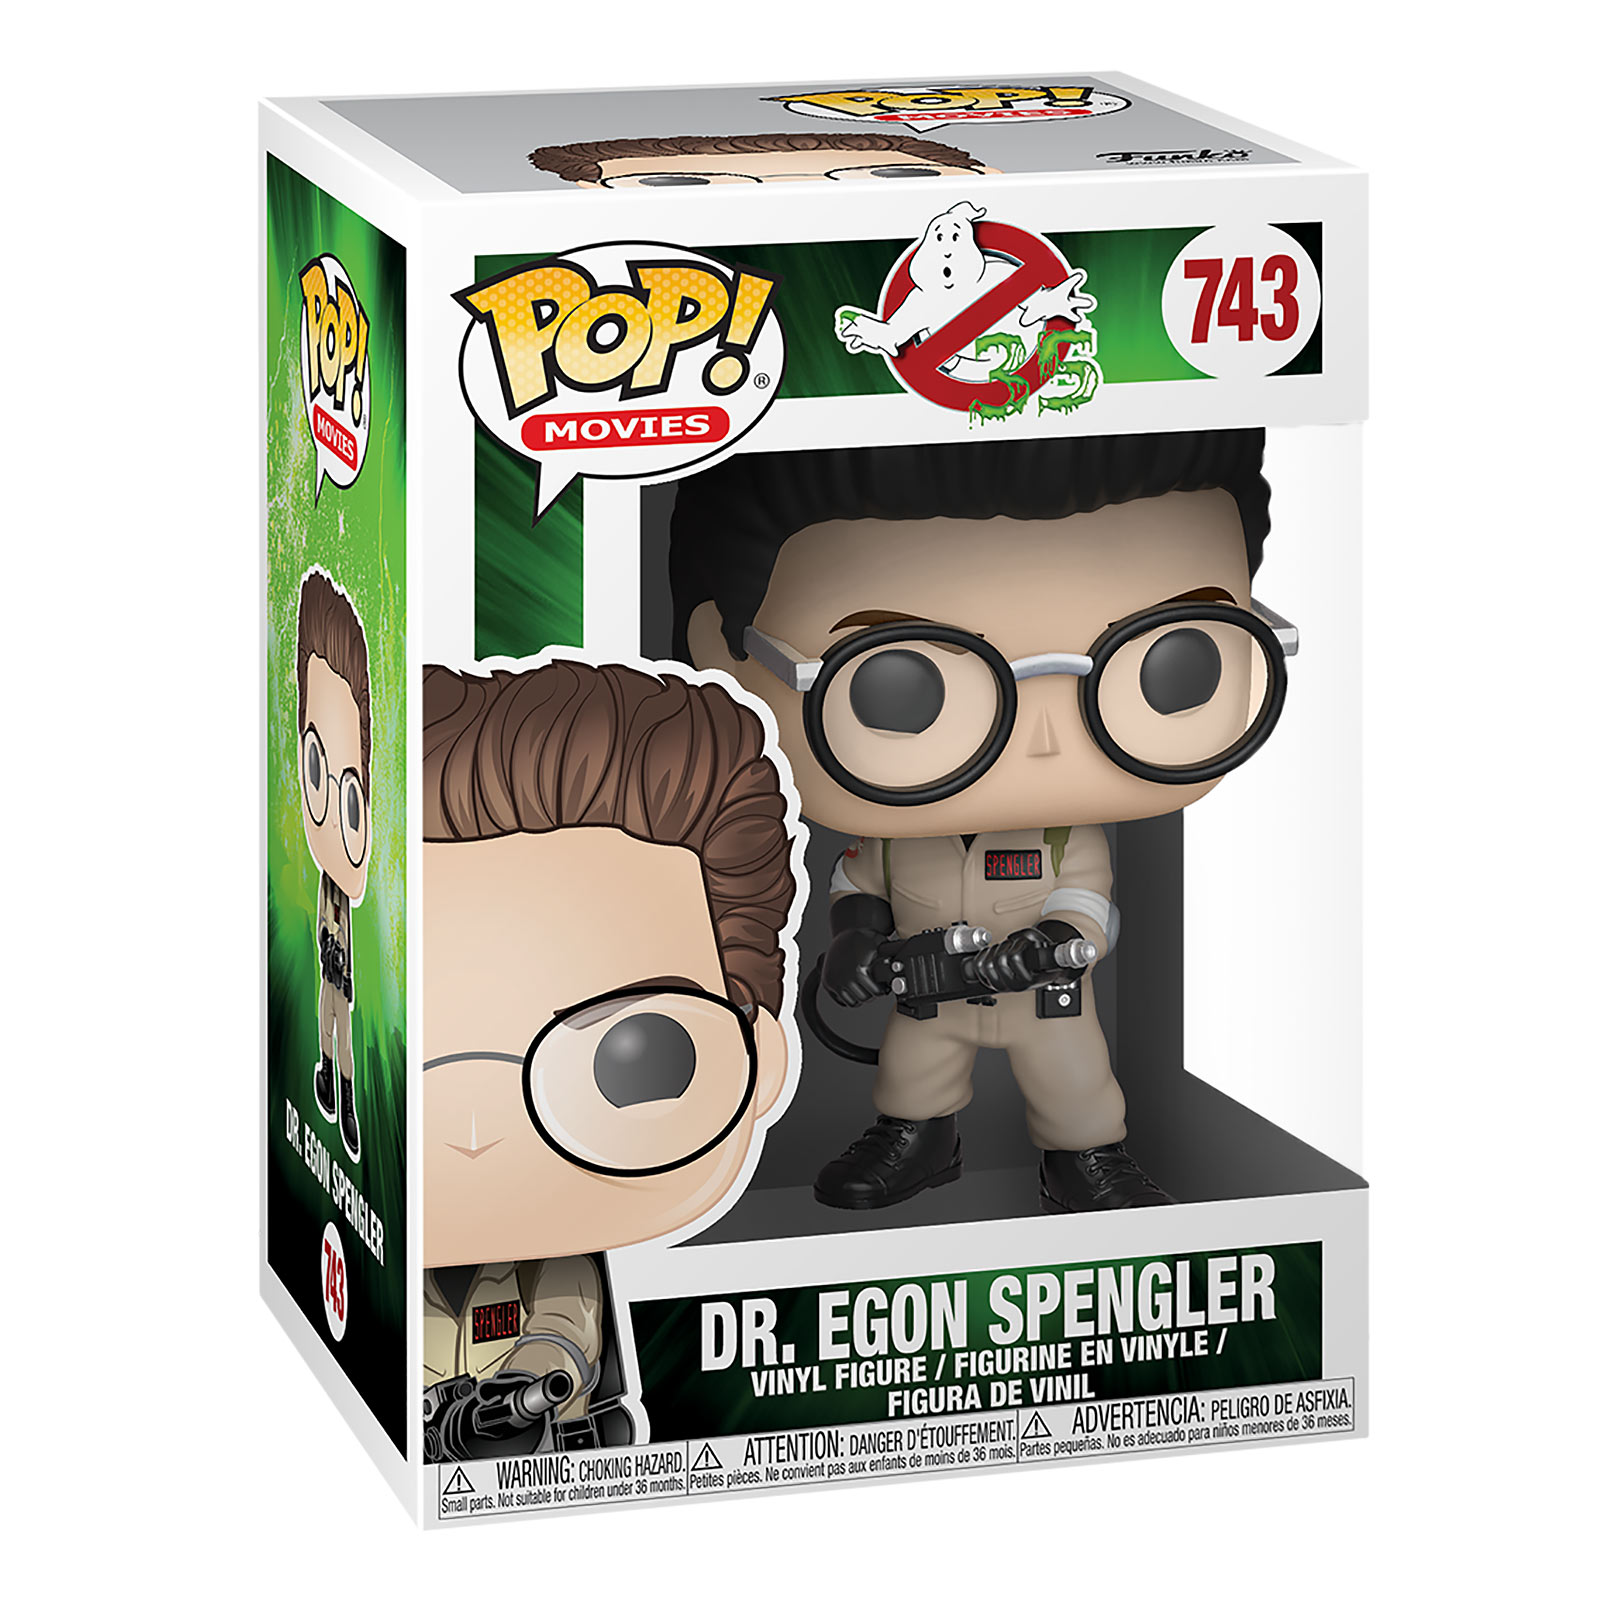 Ghostbusters - Dr. Egon Spengler Funko Pop Figurine